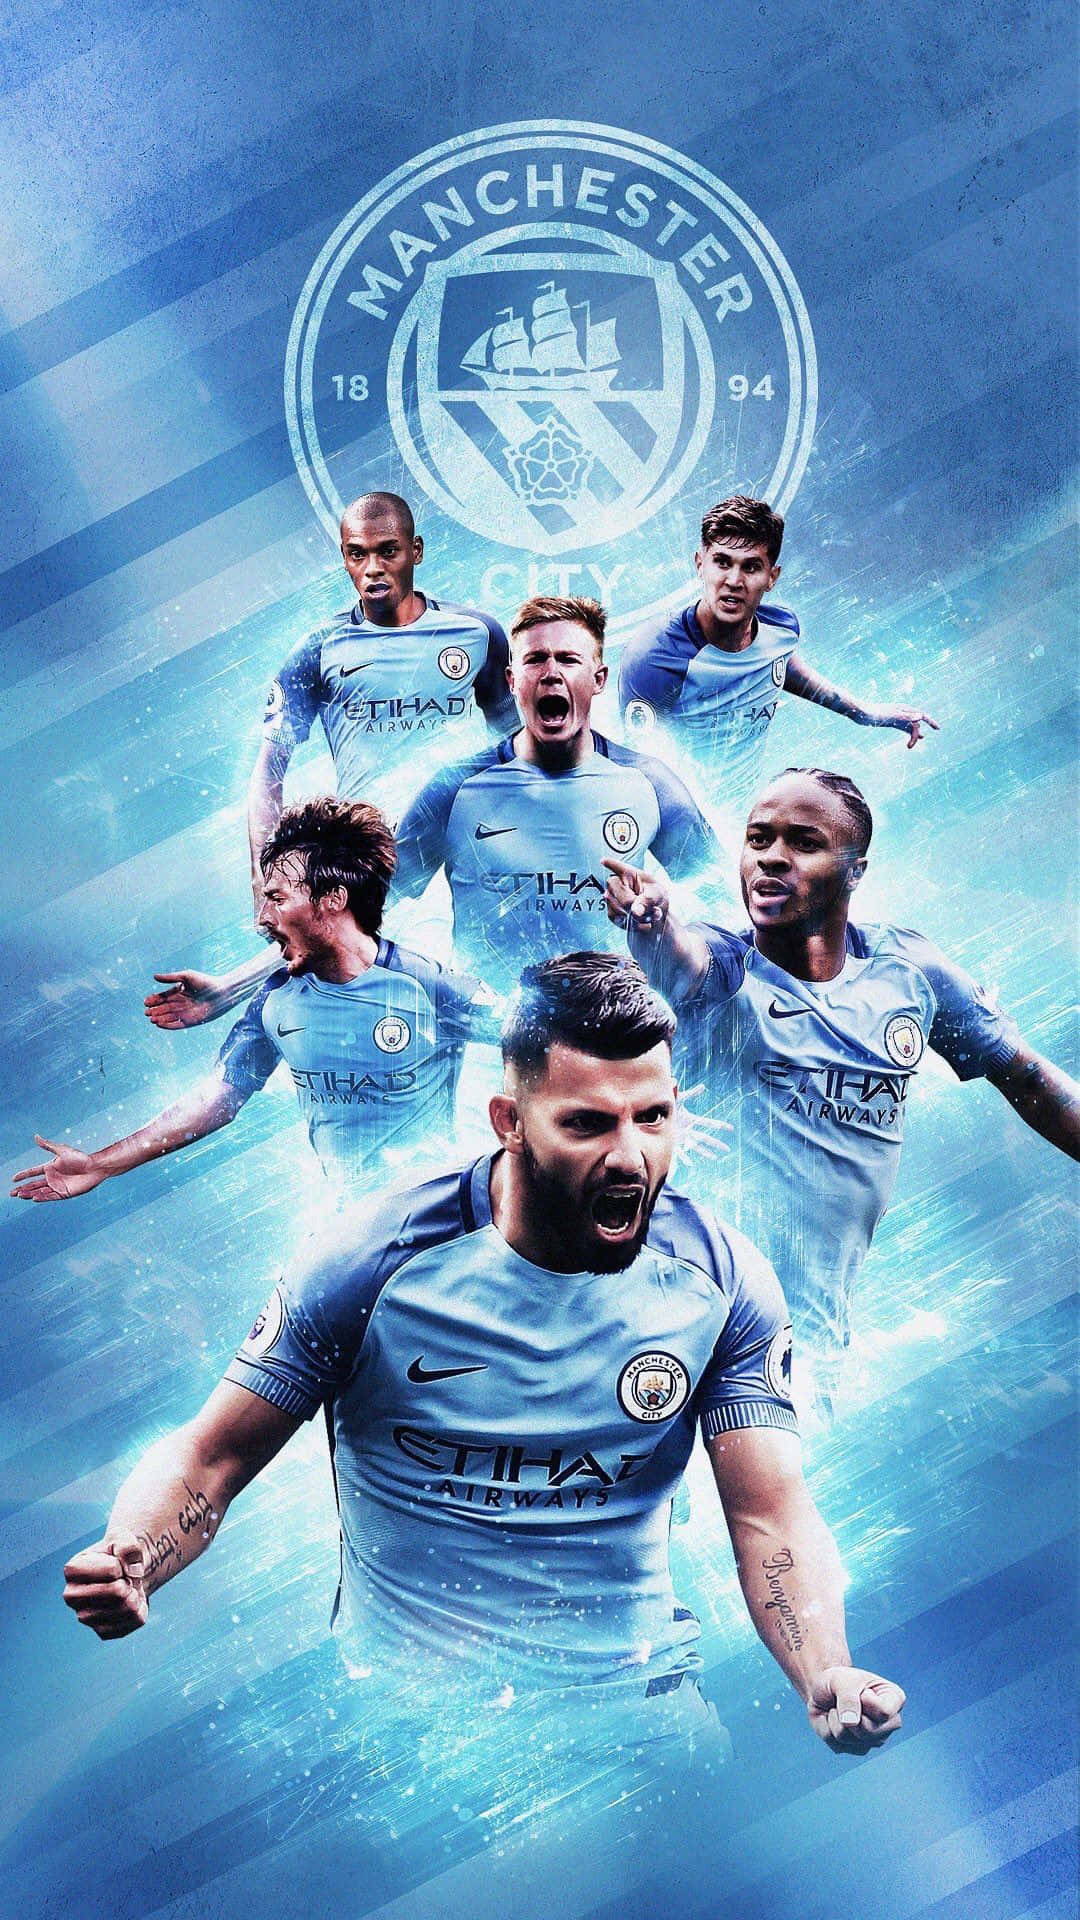 Manchester City Iphone Wallpaper